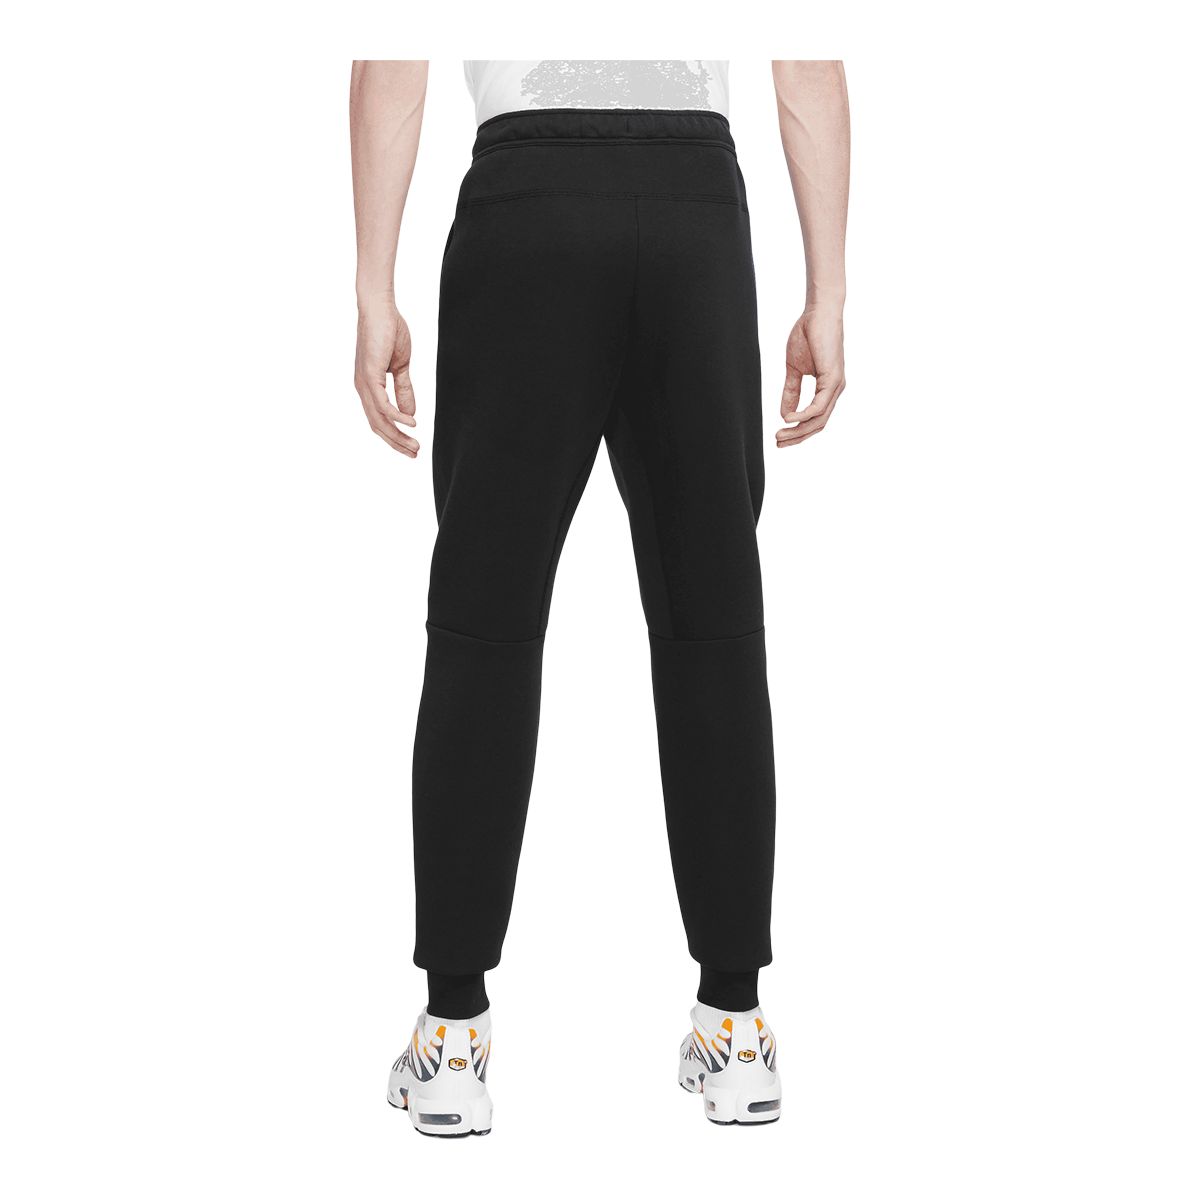 Nike Tech Fleece Tailored Pant » Buy online now!